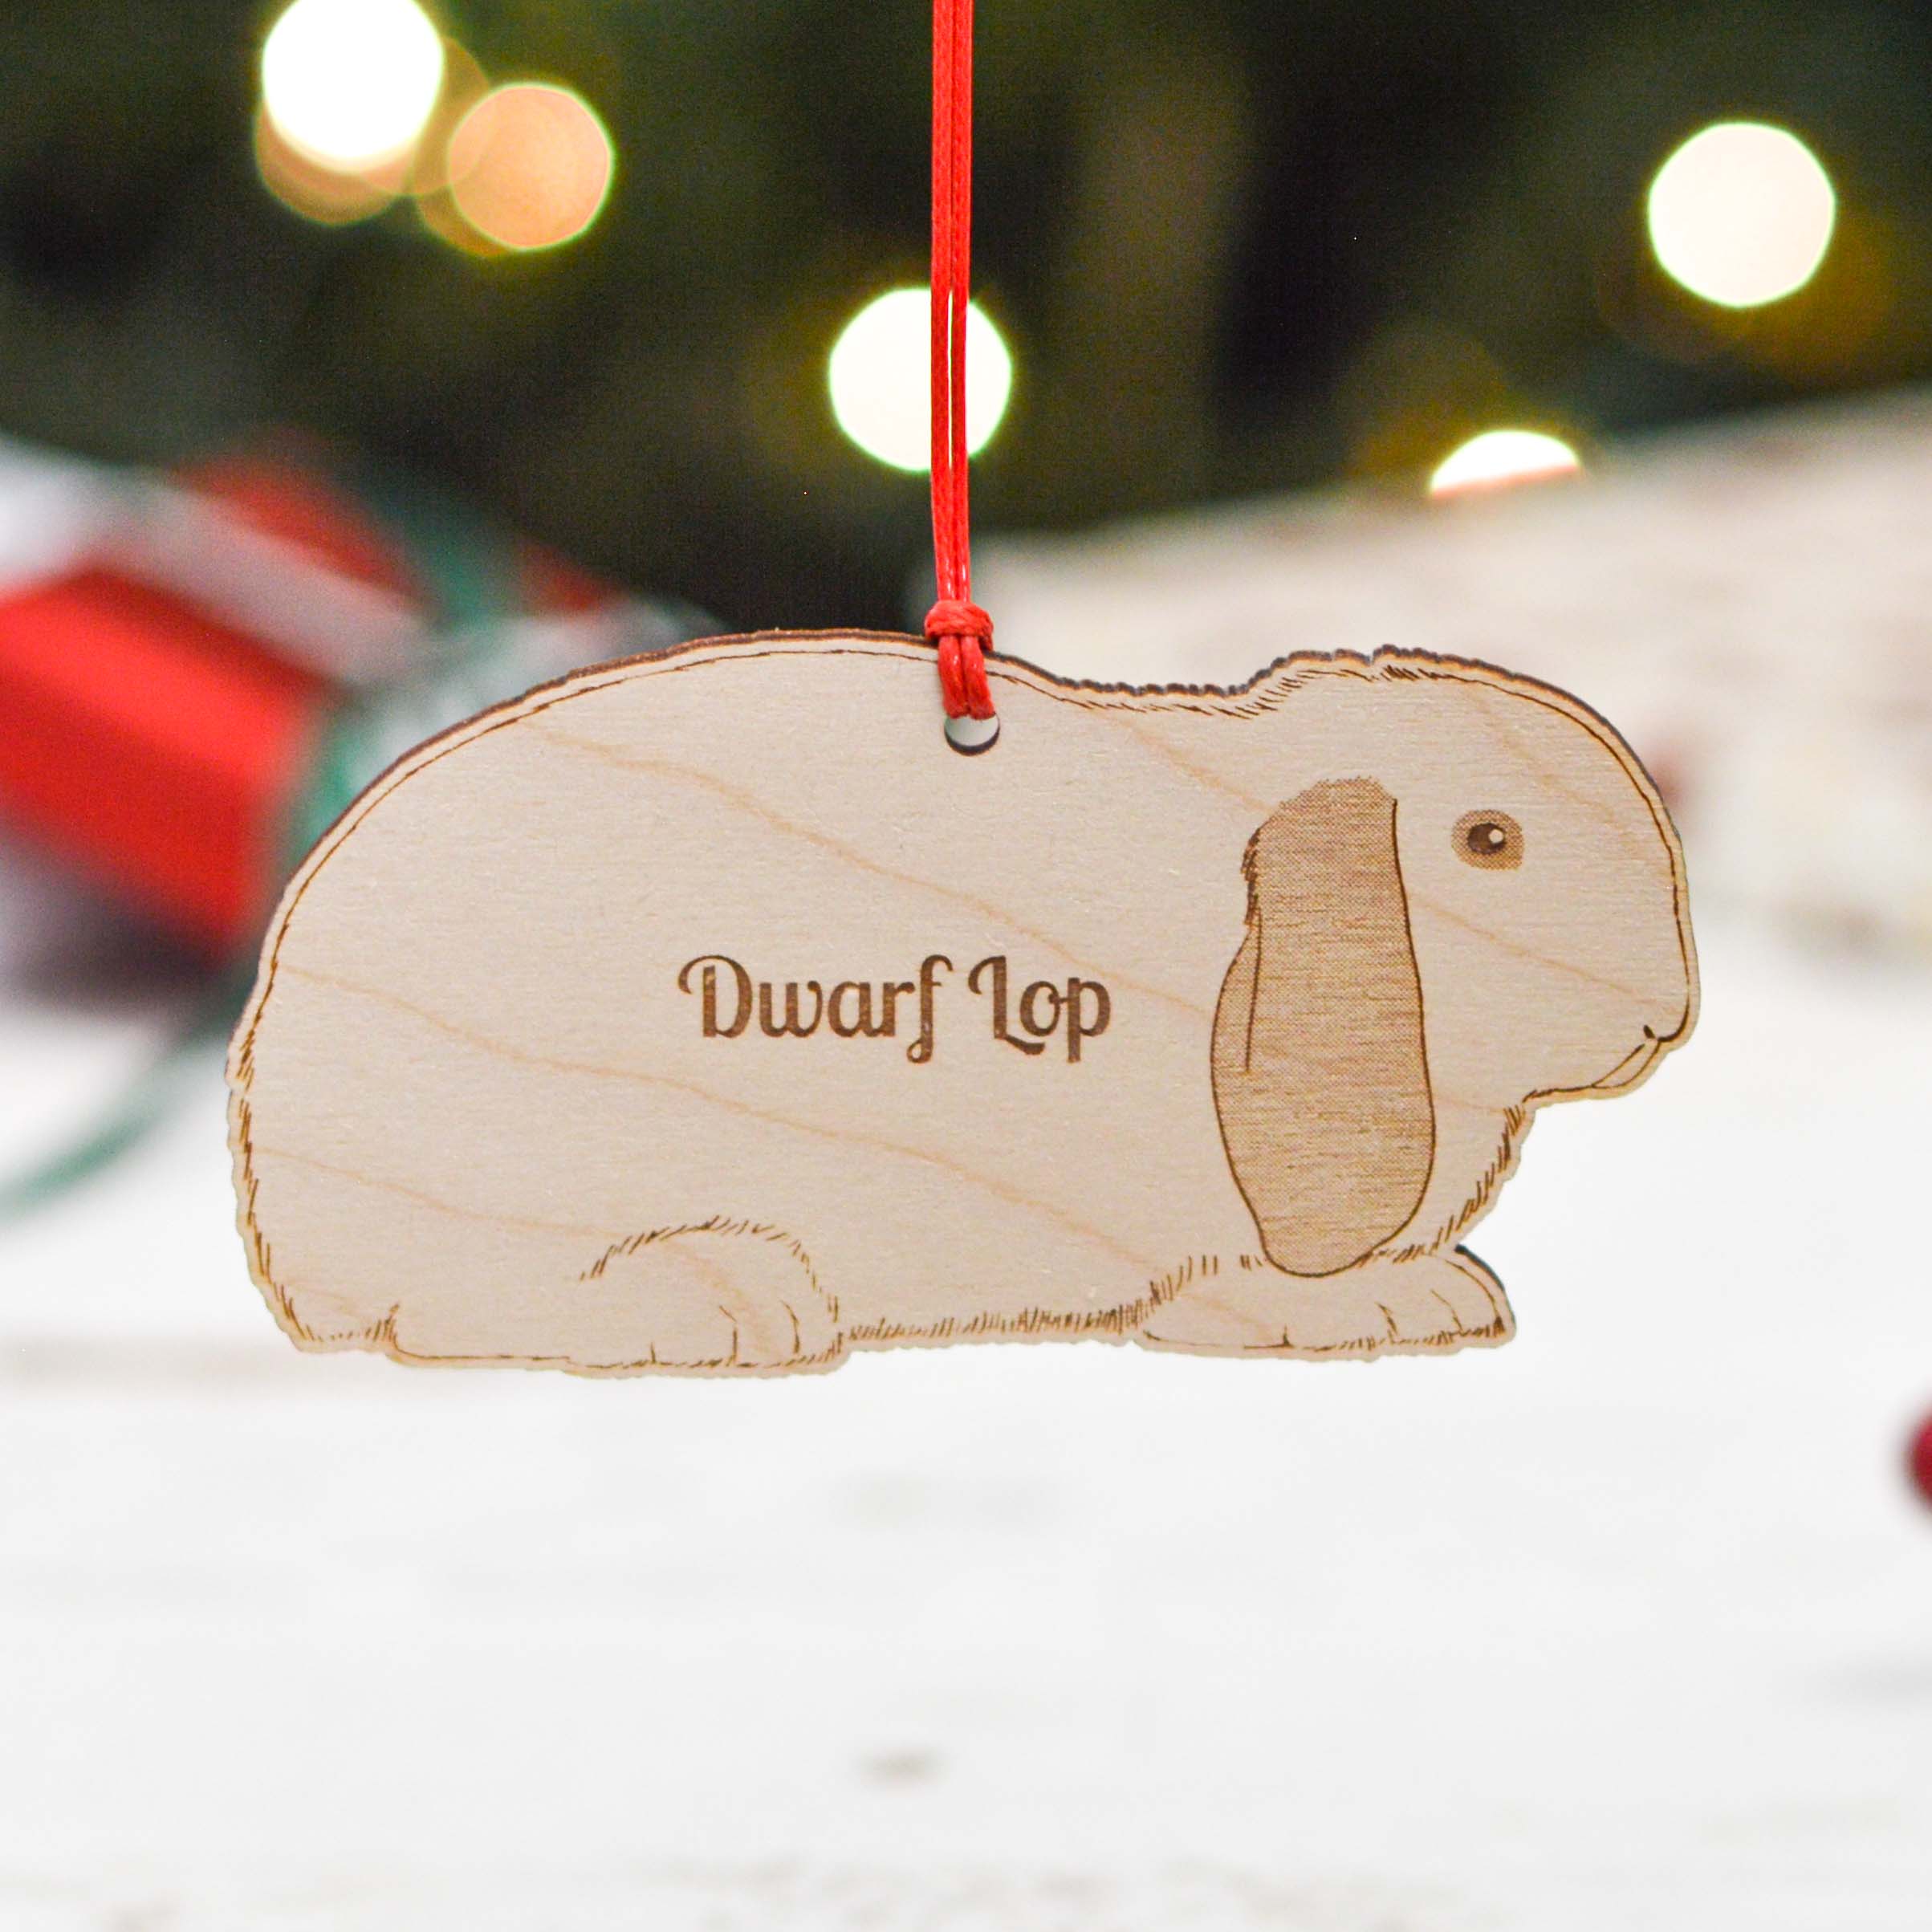 Personalised Dwarf Lop Rabbit Decoration